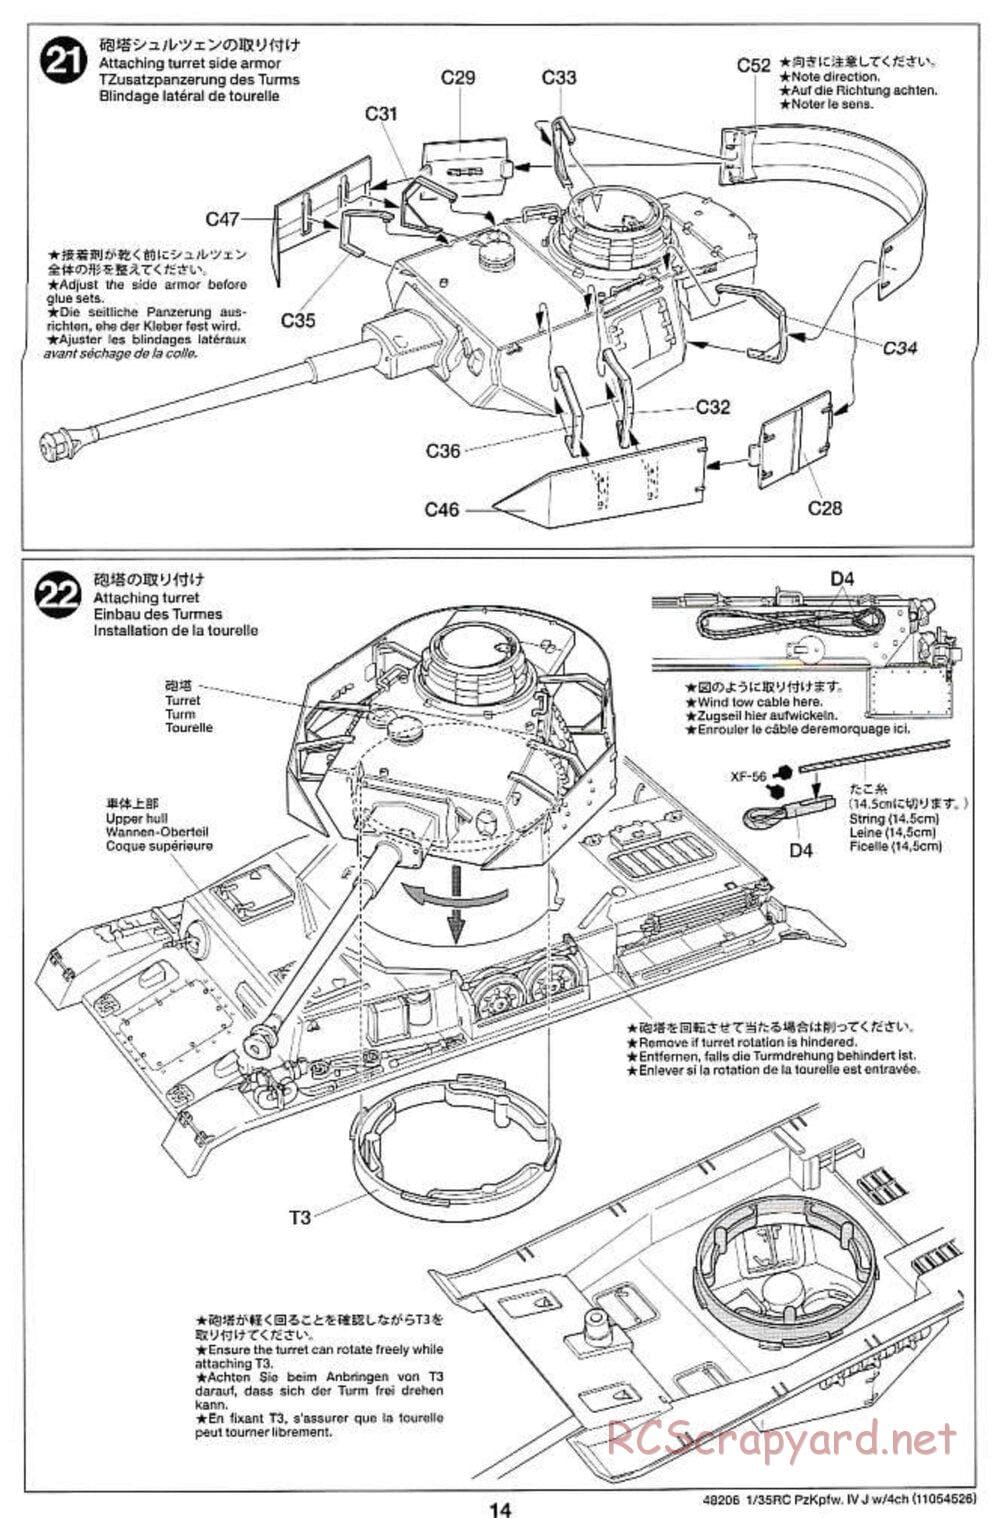 Tamiya - German Panzerkampfwagen IV Ausf.J - 1/35 Scale Chassis - Manual - Page 14